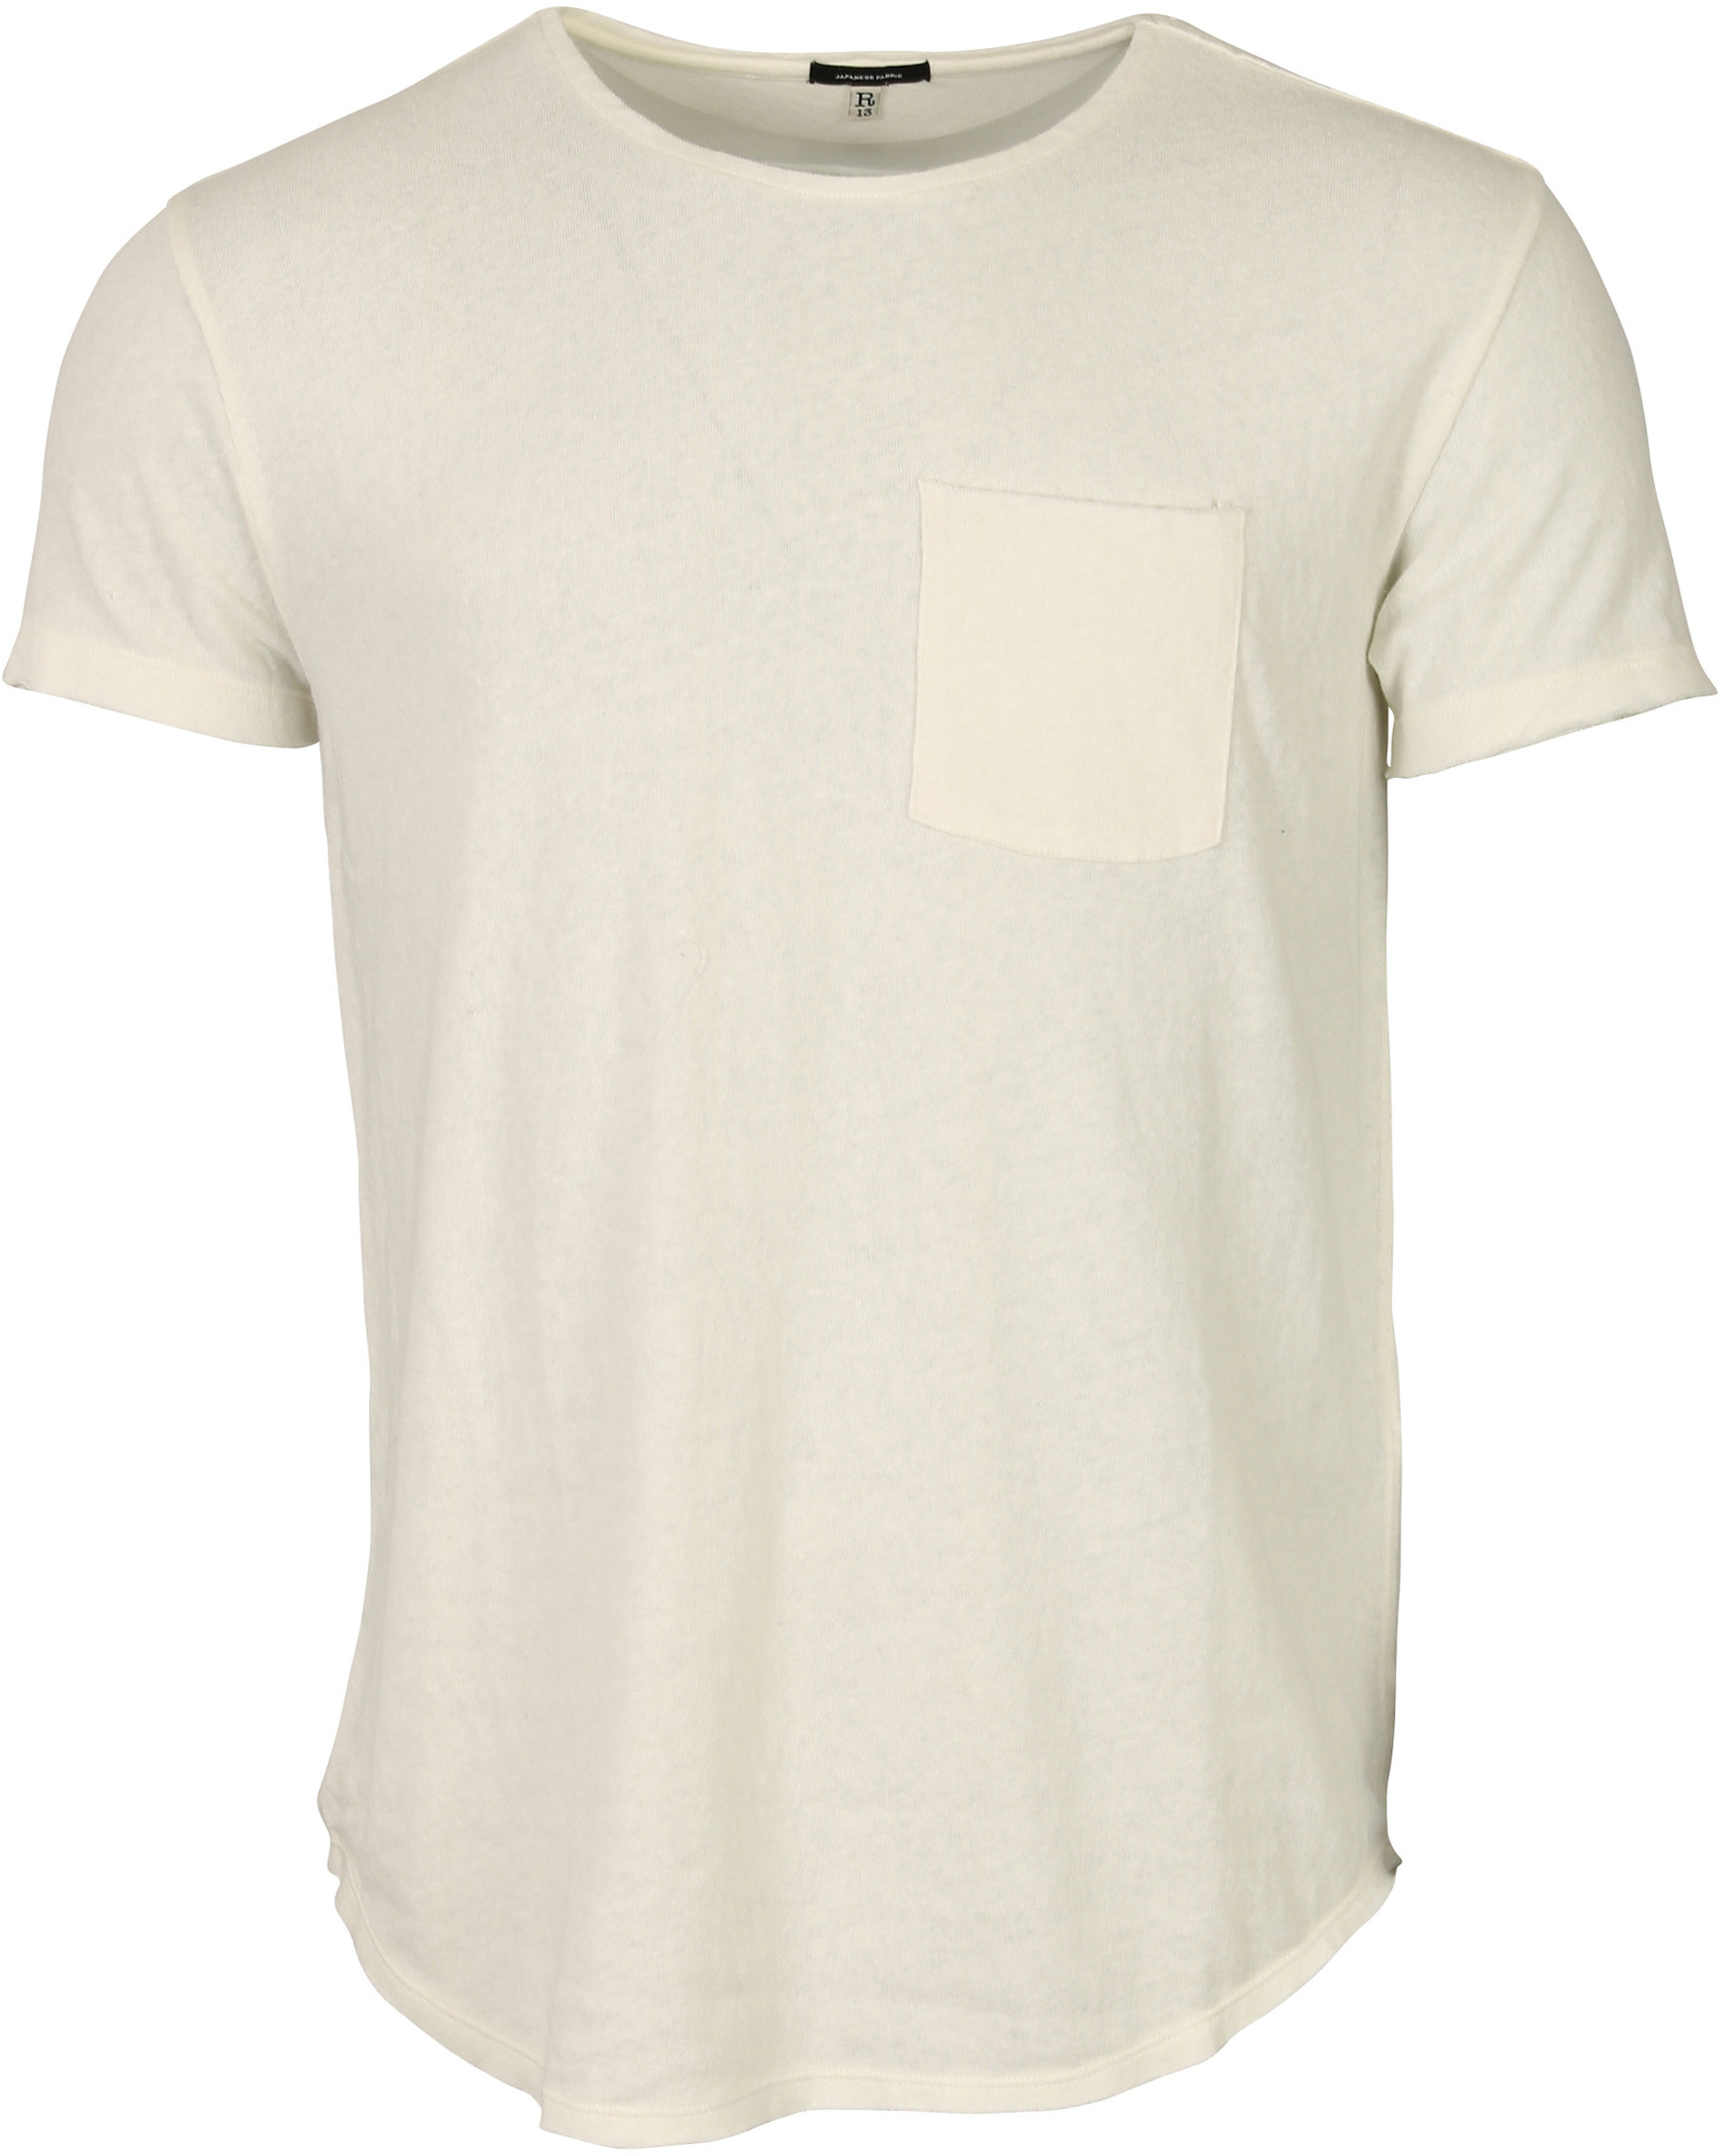 R13 Pocket T-Shirt White XS